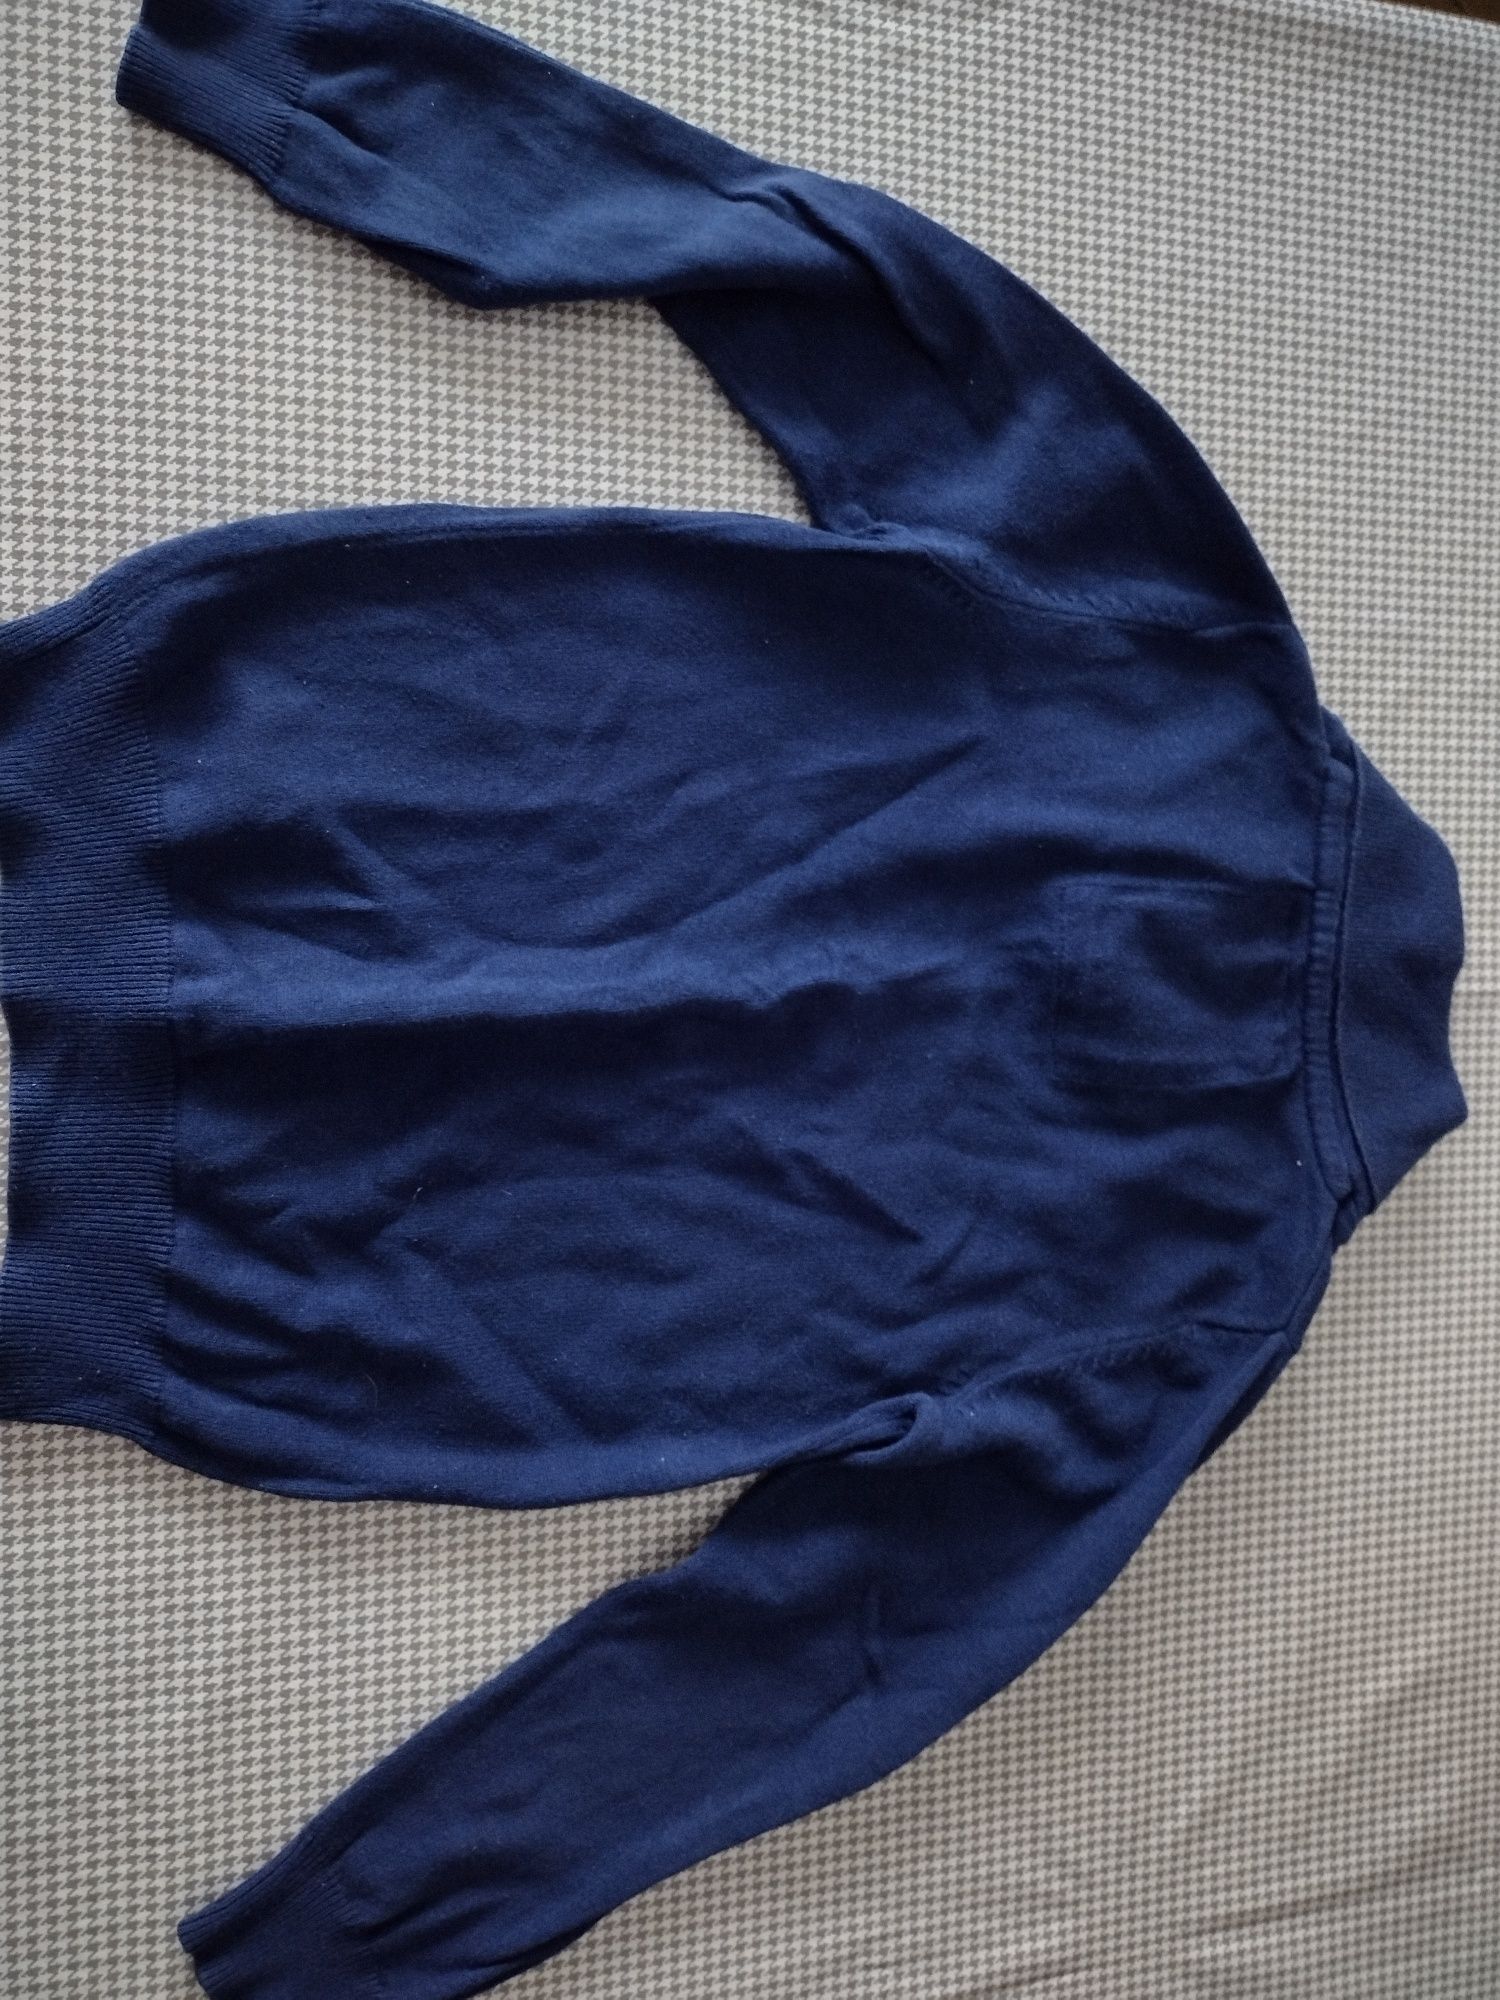 Sweter dla chlopca 116 ze Smyka